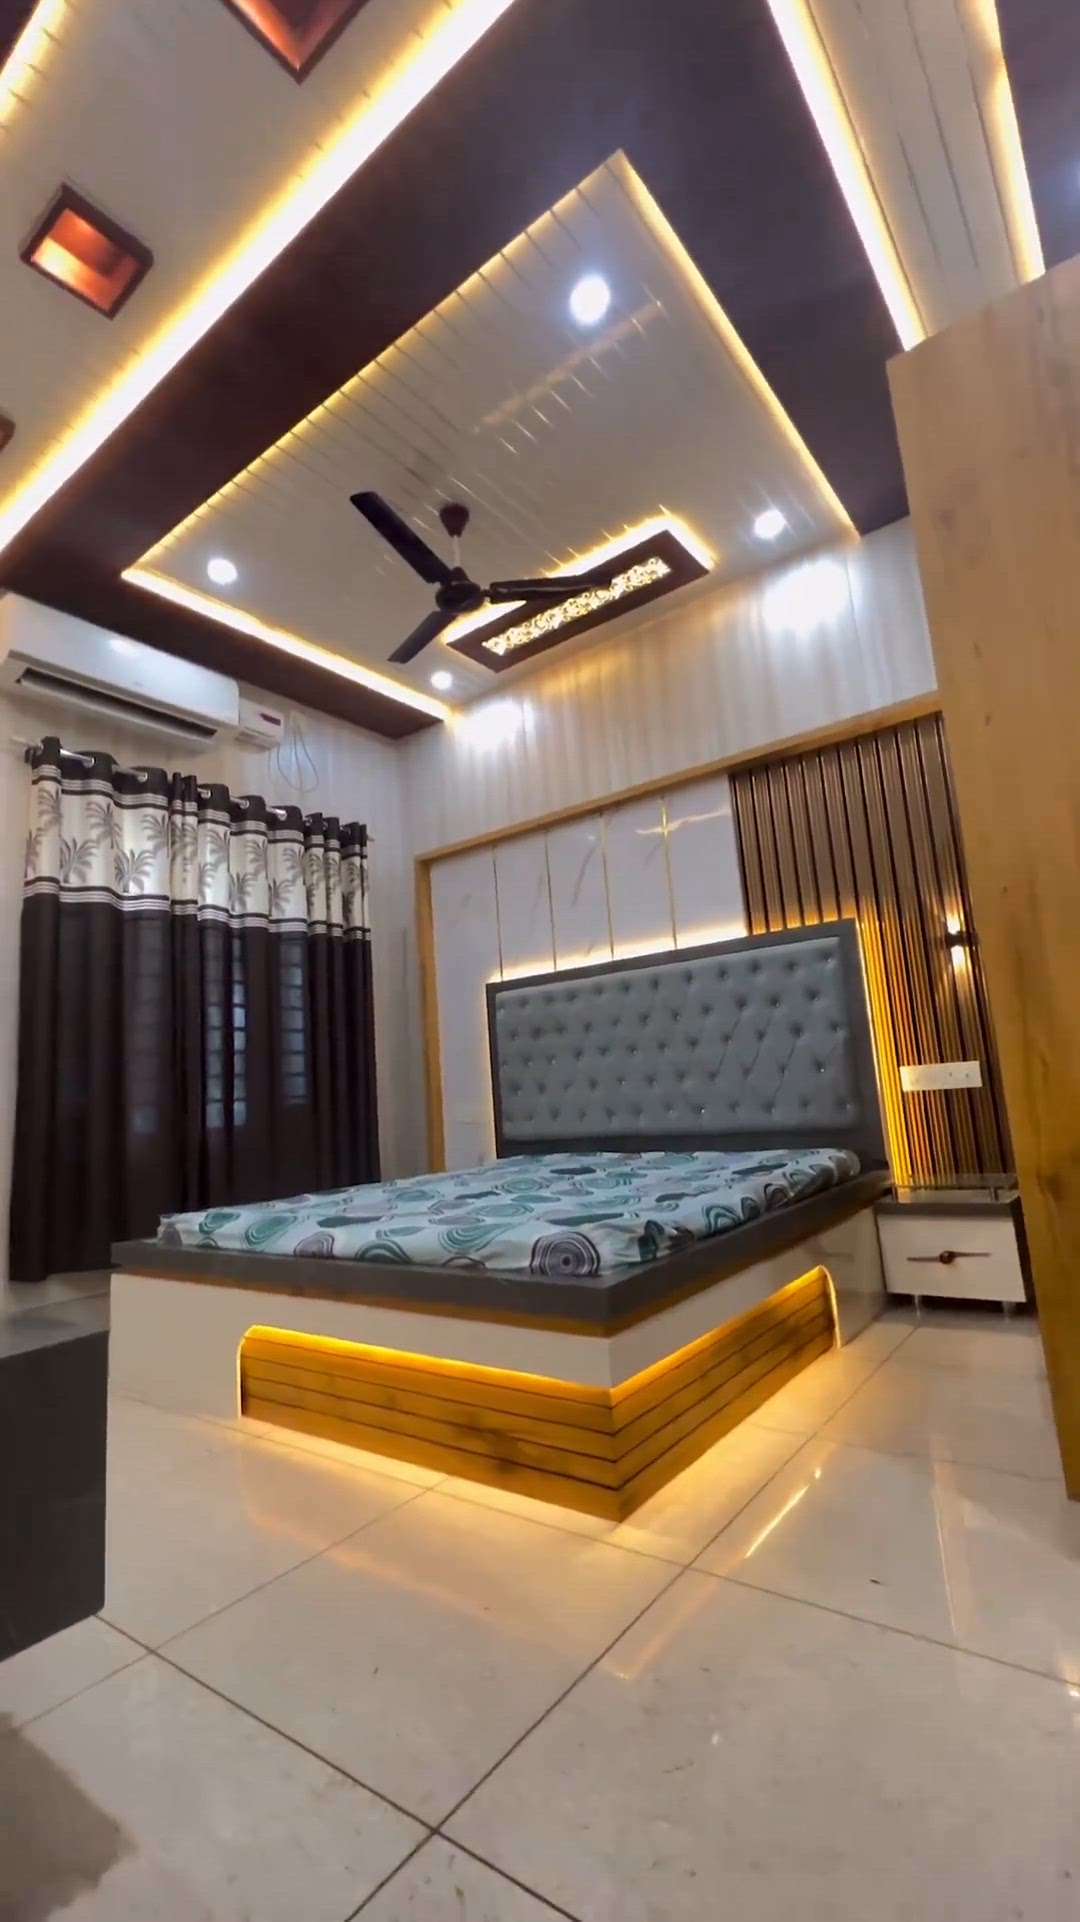 modular furniture ask KoloApp 😱 modular wardrobe modular bedroom new video  #Modularfurniture  #modularwardrobe  #Rk  #koloapp  #kolopost  #koloviral  #ask  #askcarpenter  #askexperts